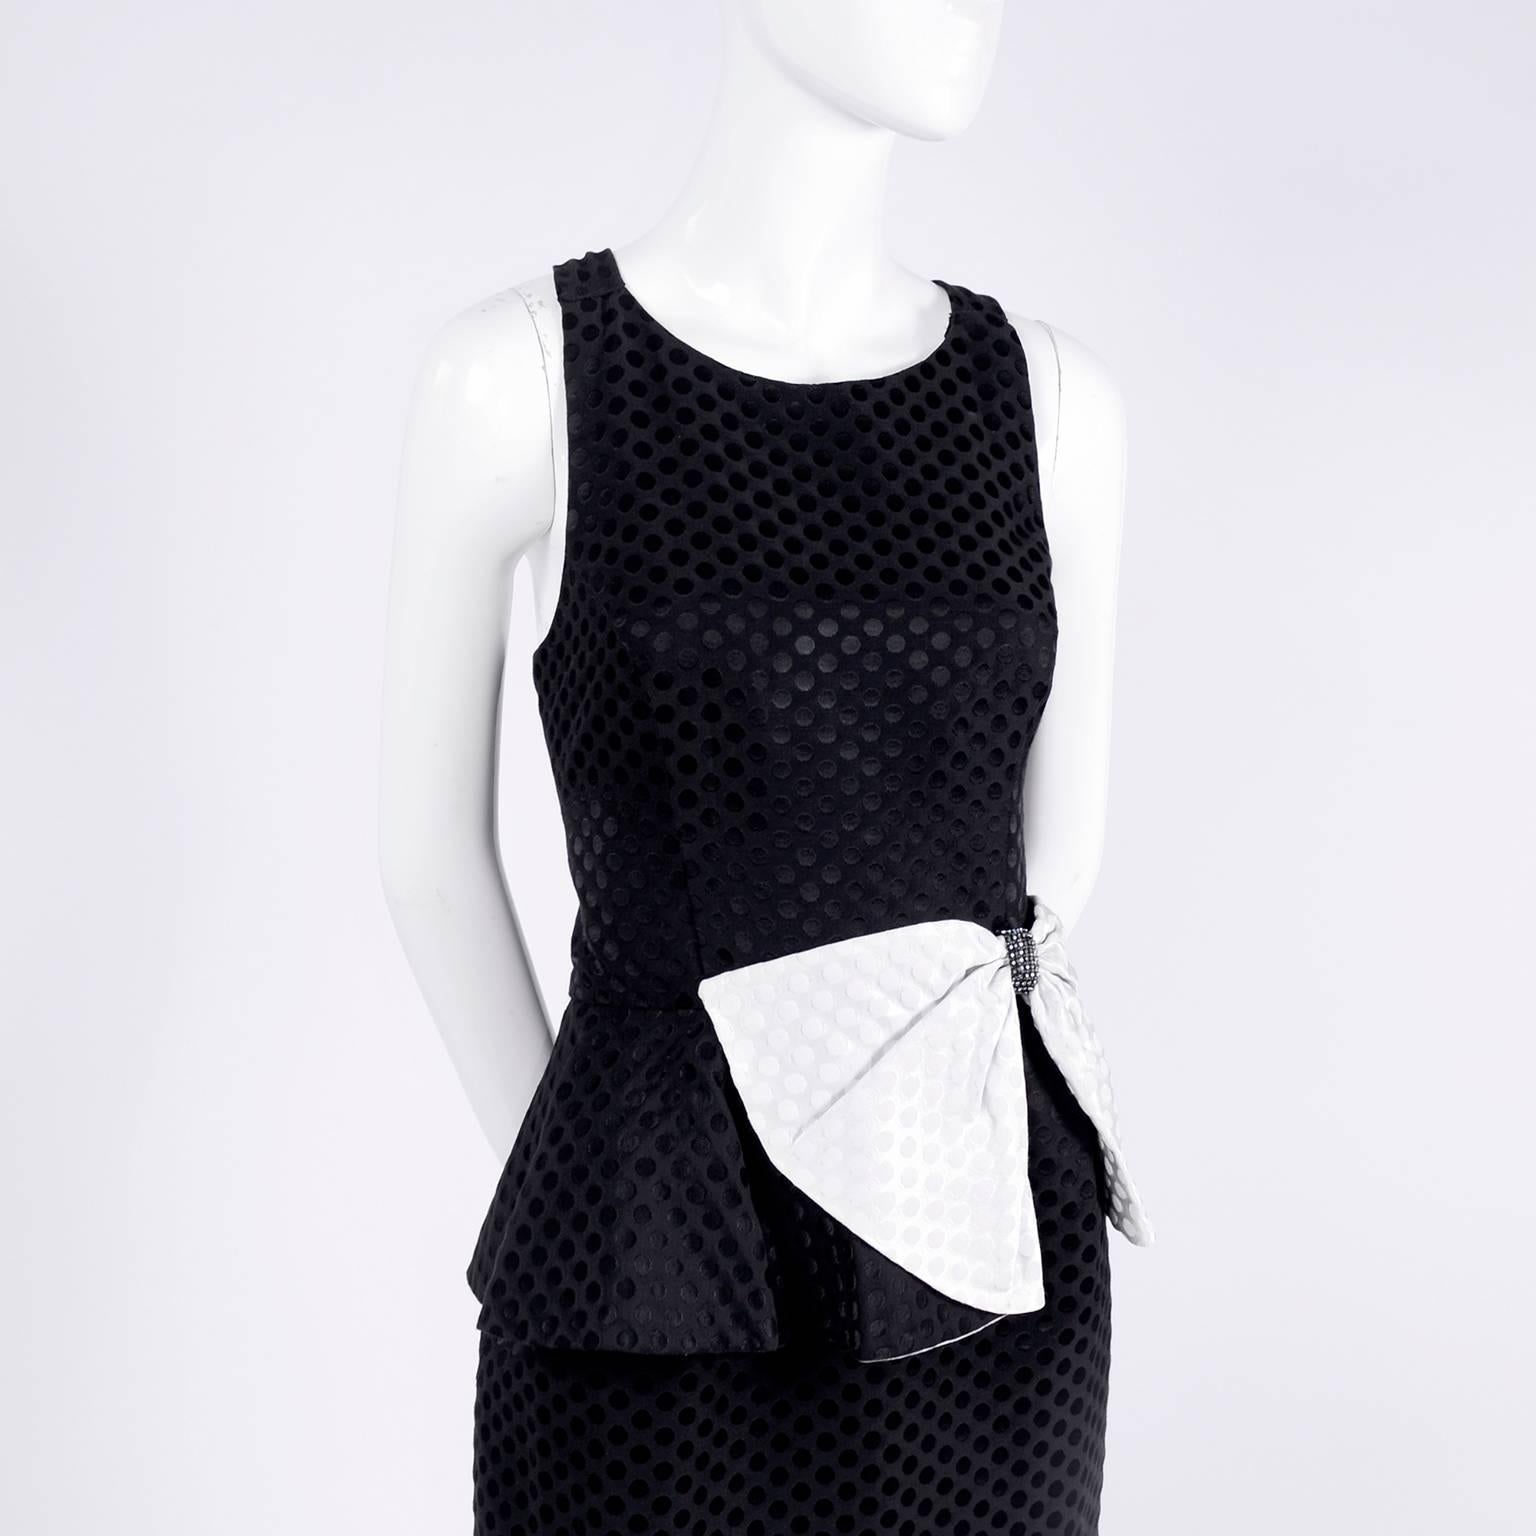 Black / White Polka Dot Dress With Rhinestone Embellished Bow and Peplum, 1980s  1